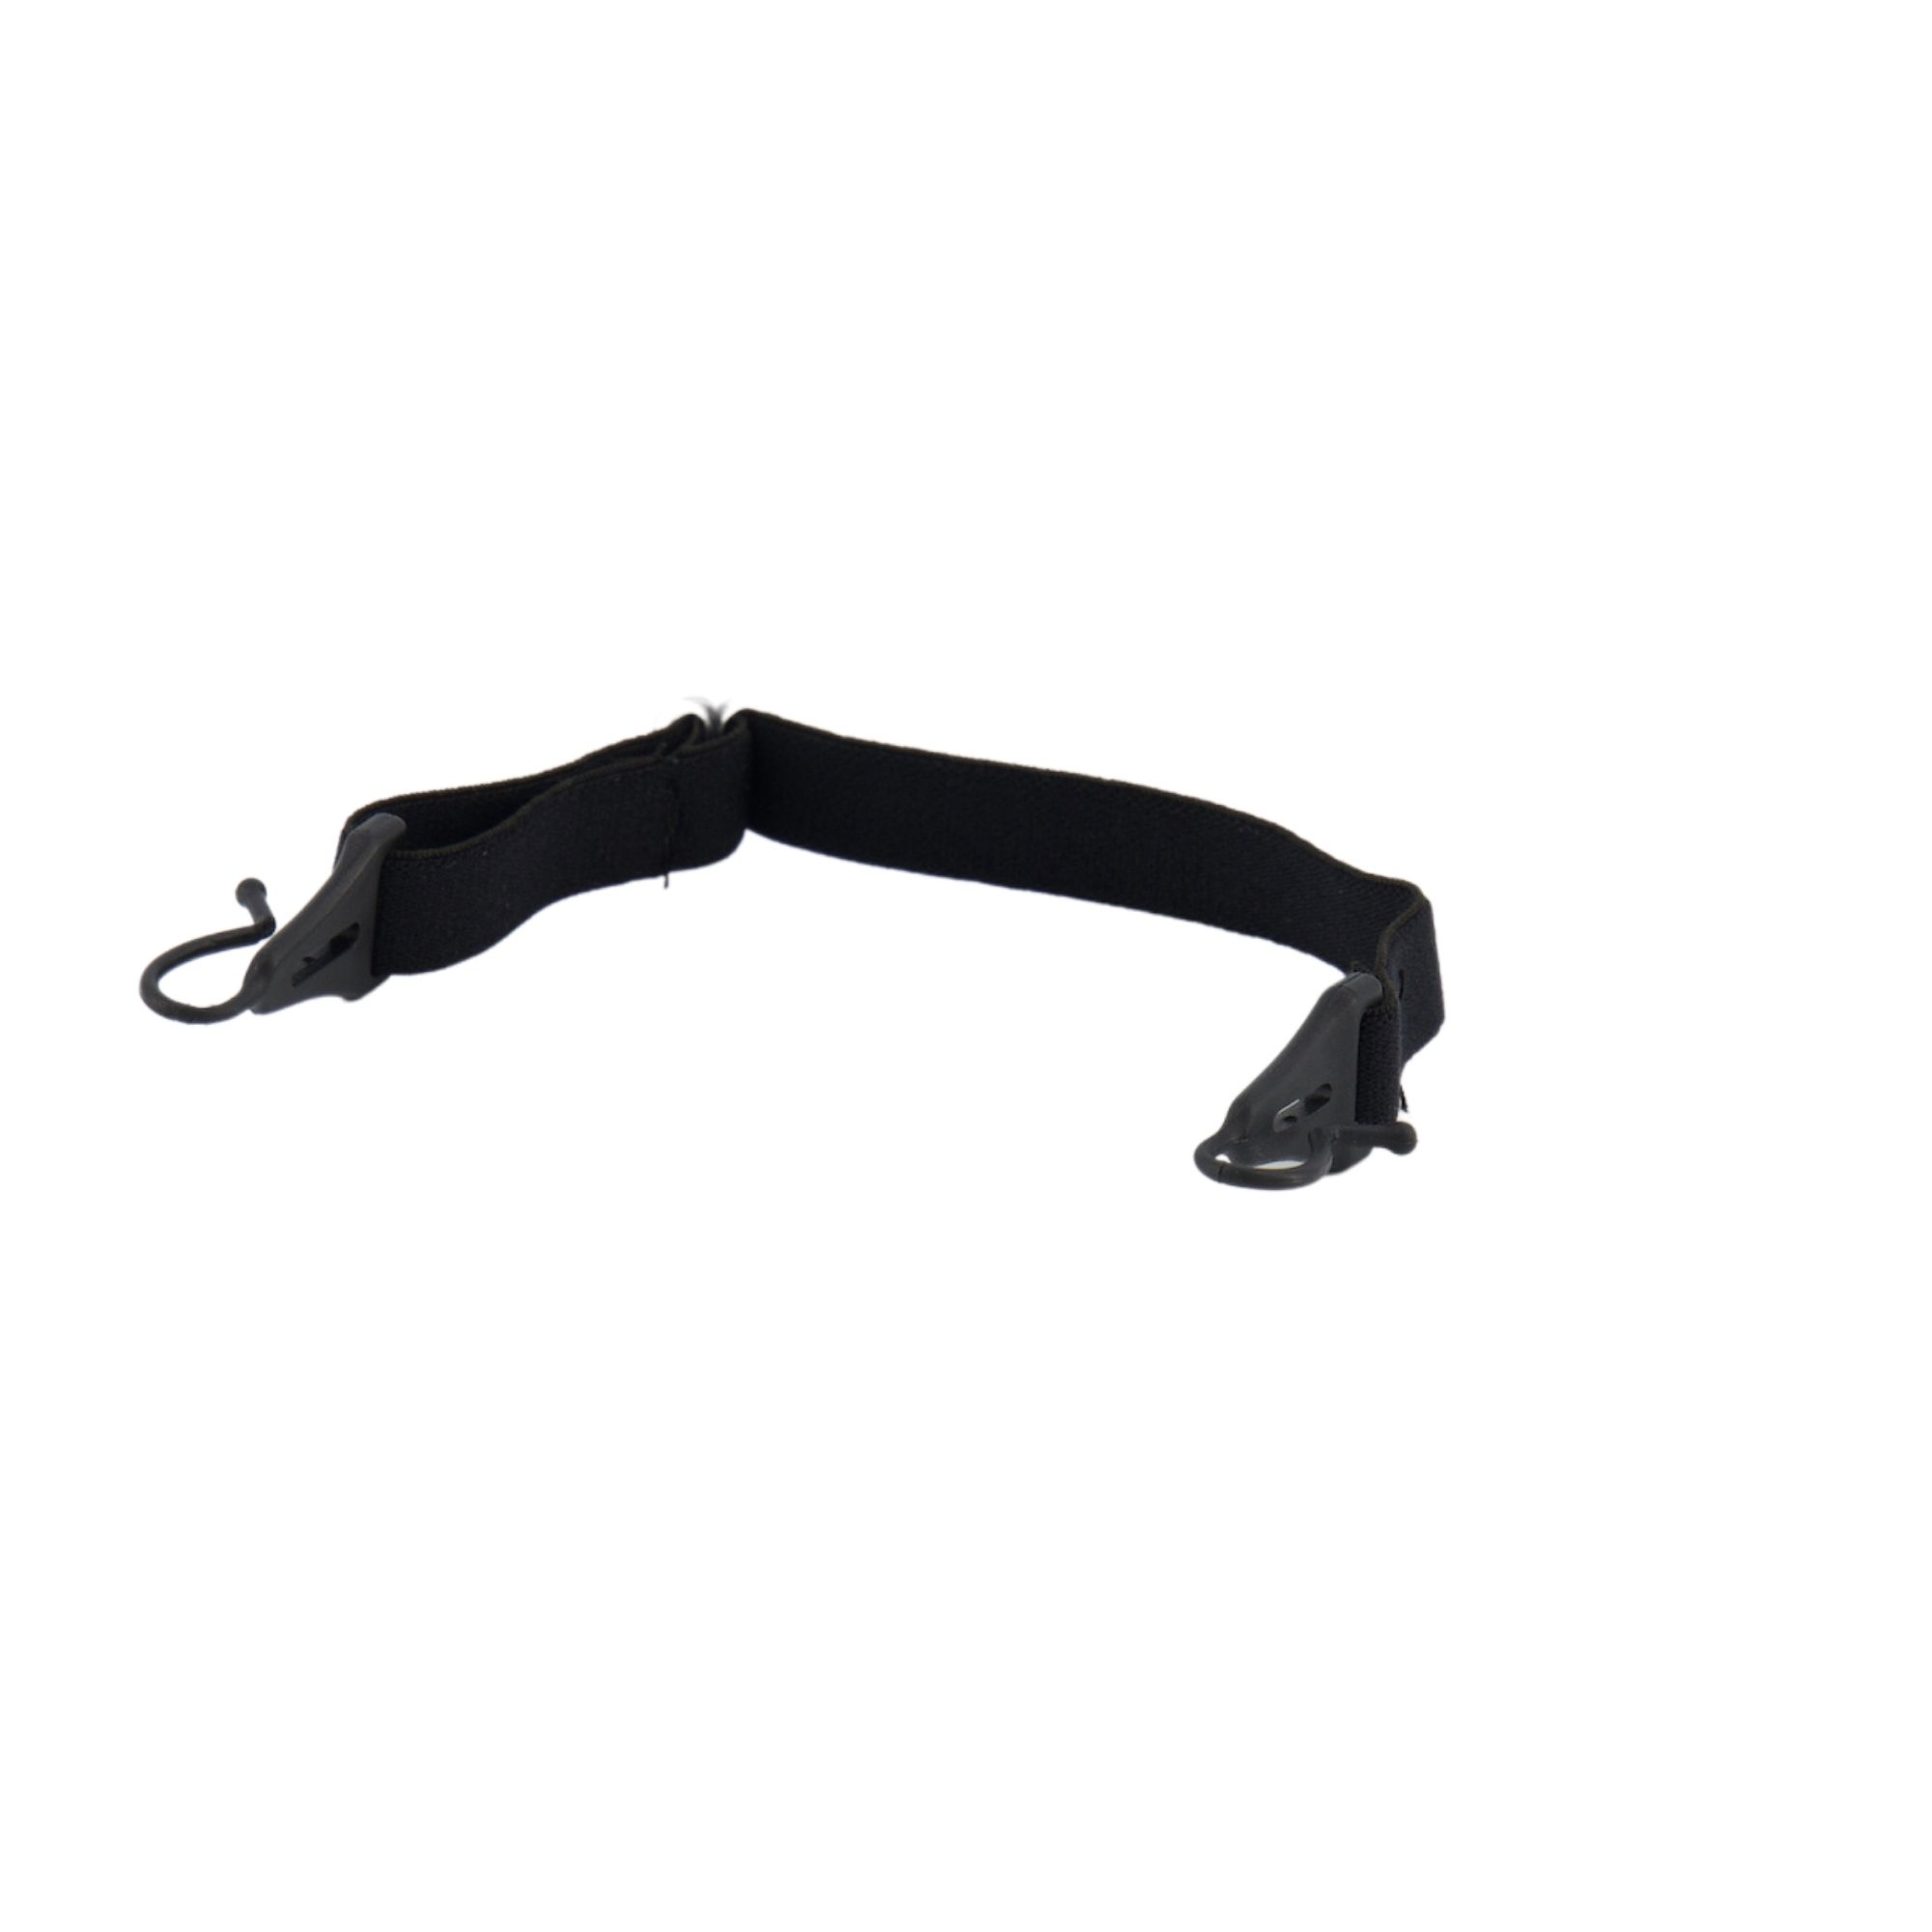 Sunglass cord, elastic Black